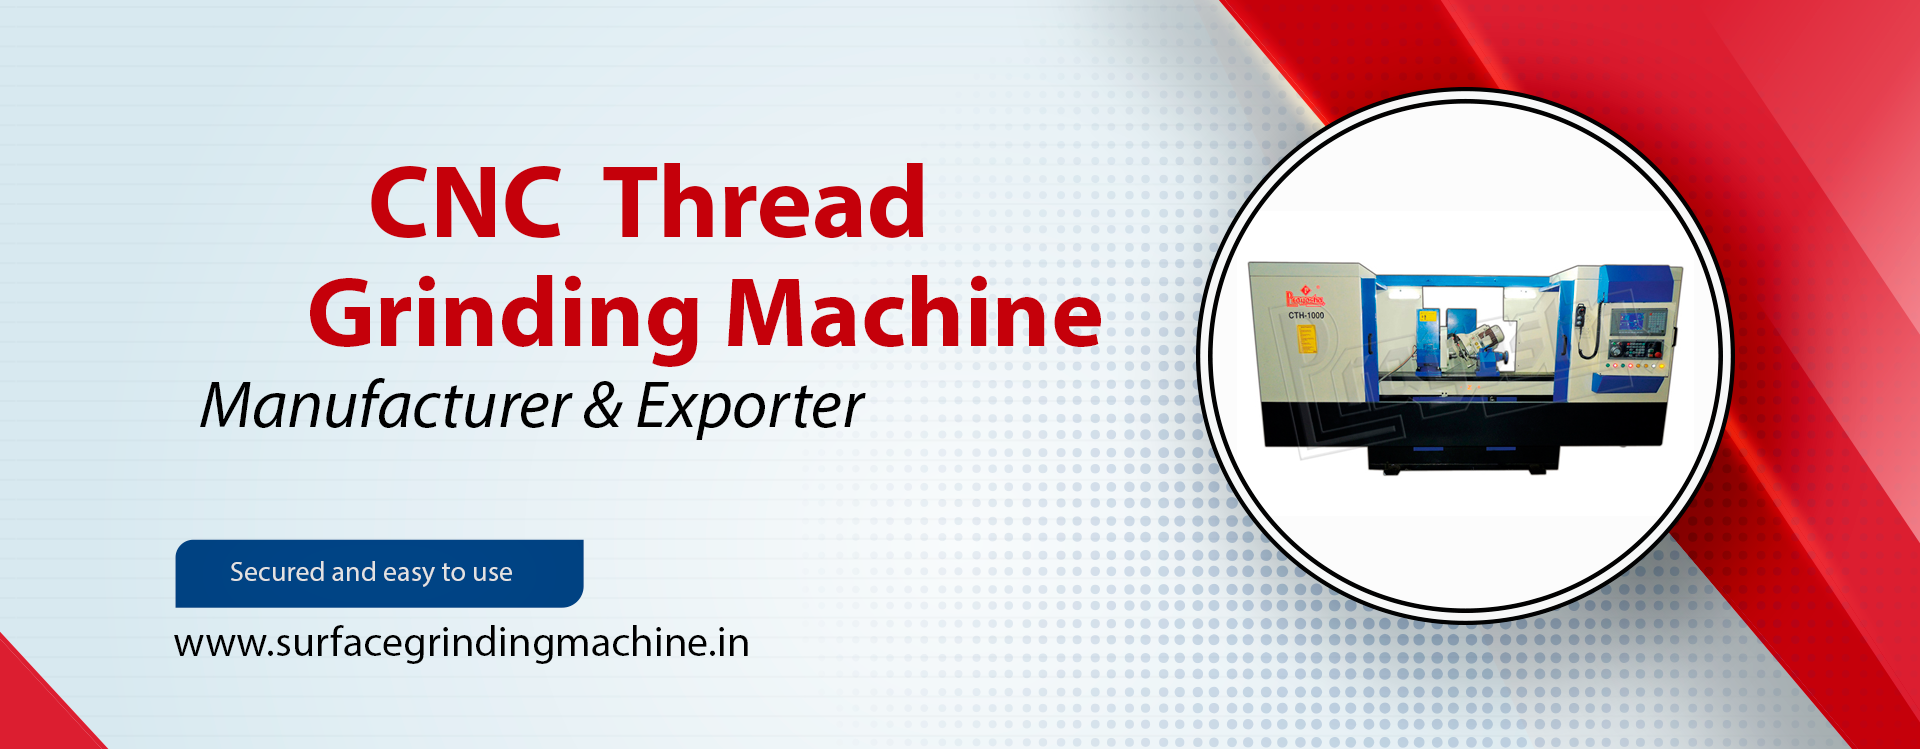 Cnc Thread Grinding Machine Manufacturer in India.